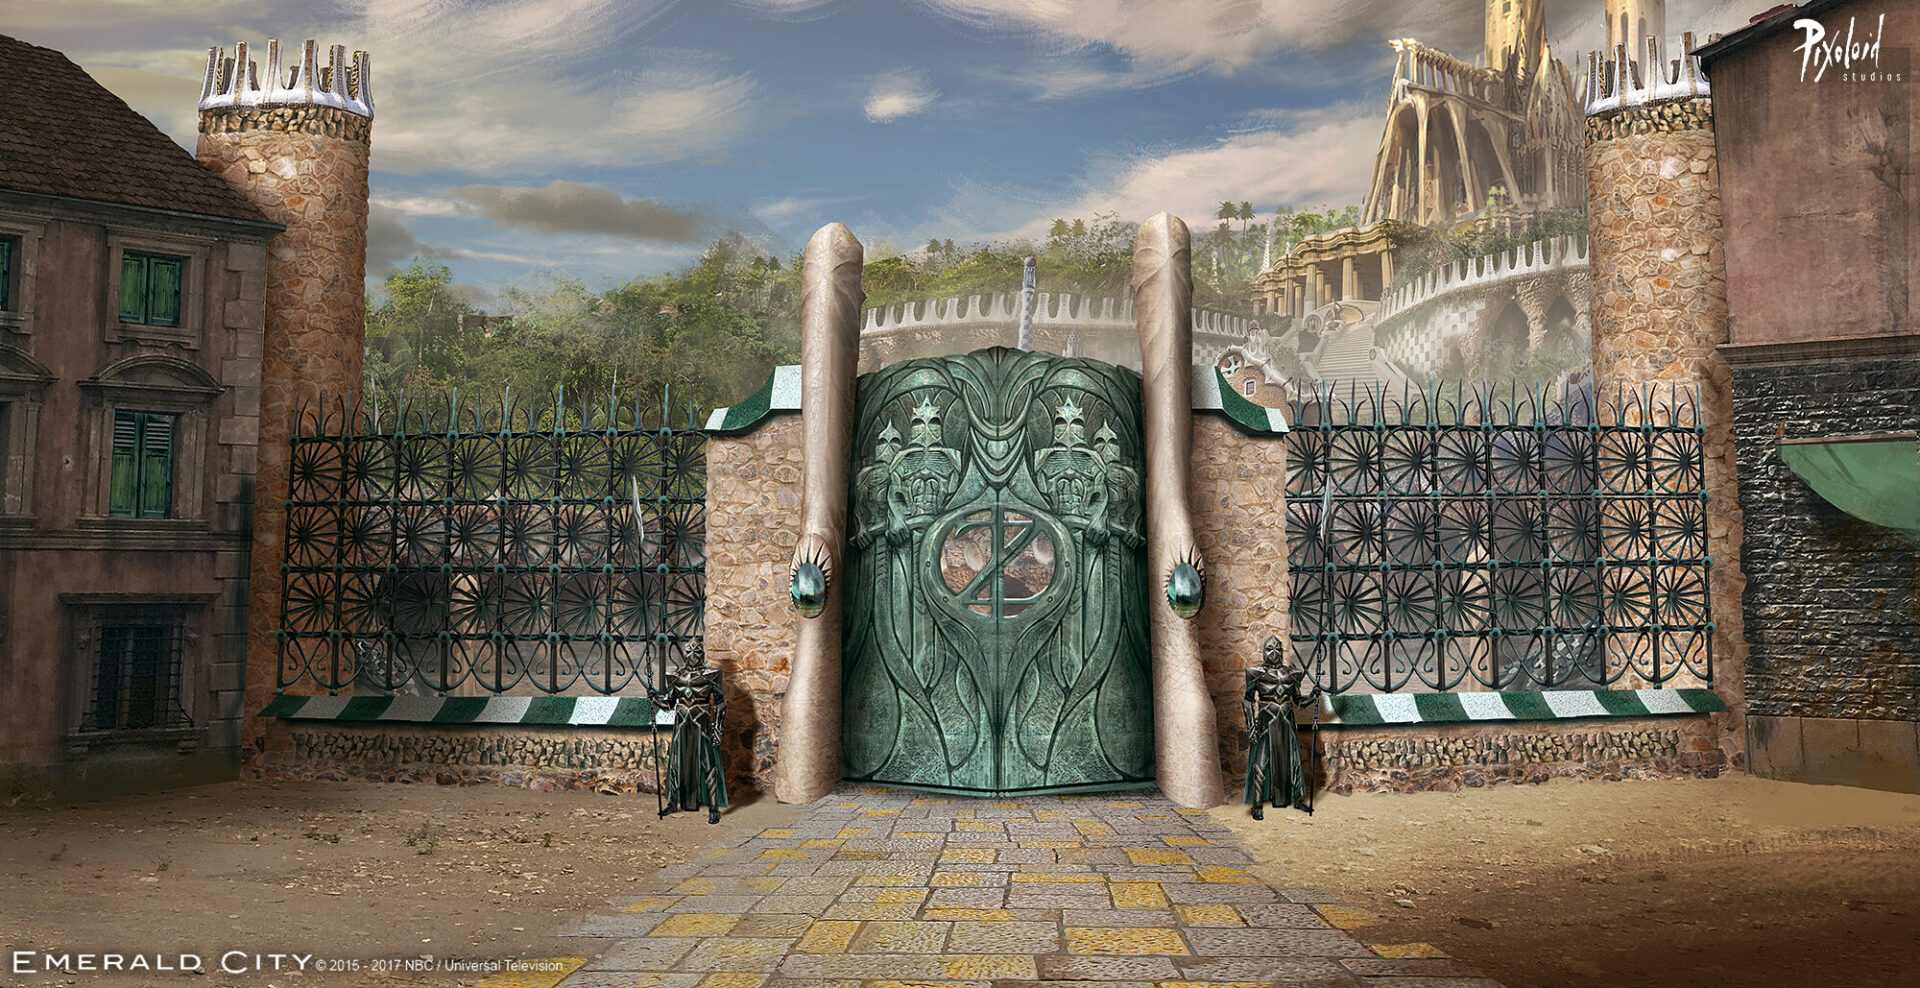 Emerald City city gate concept